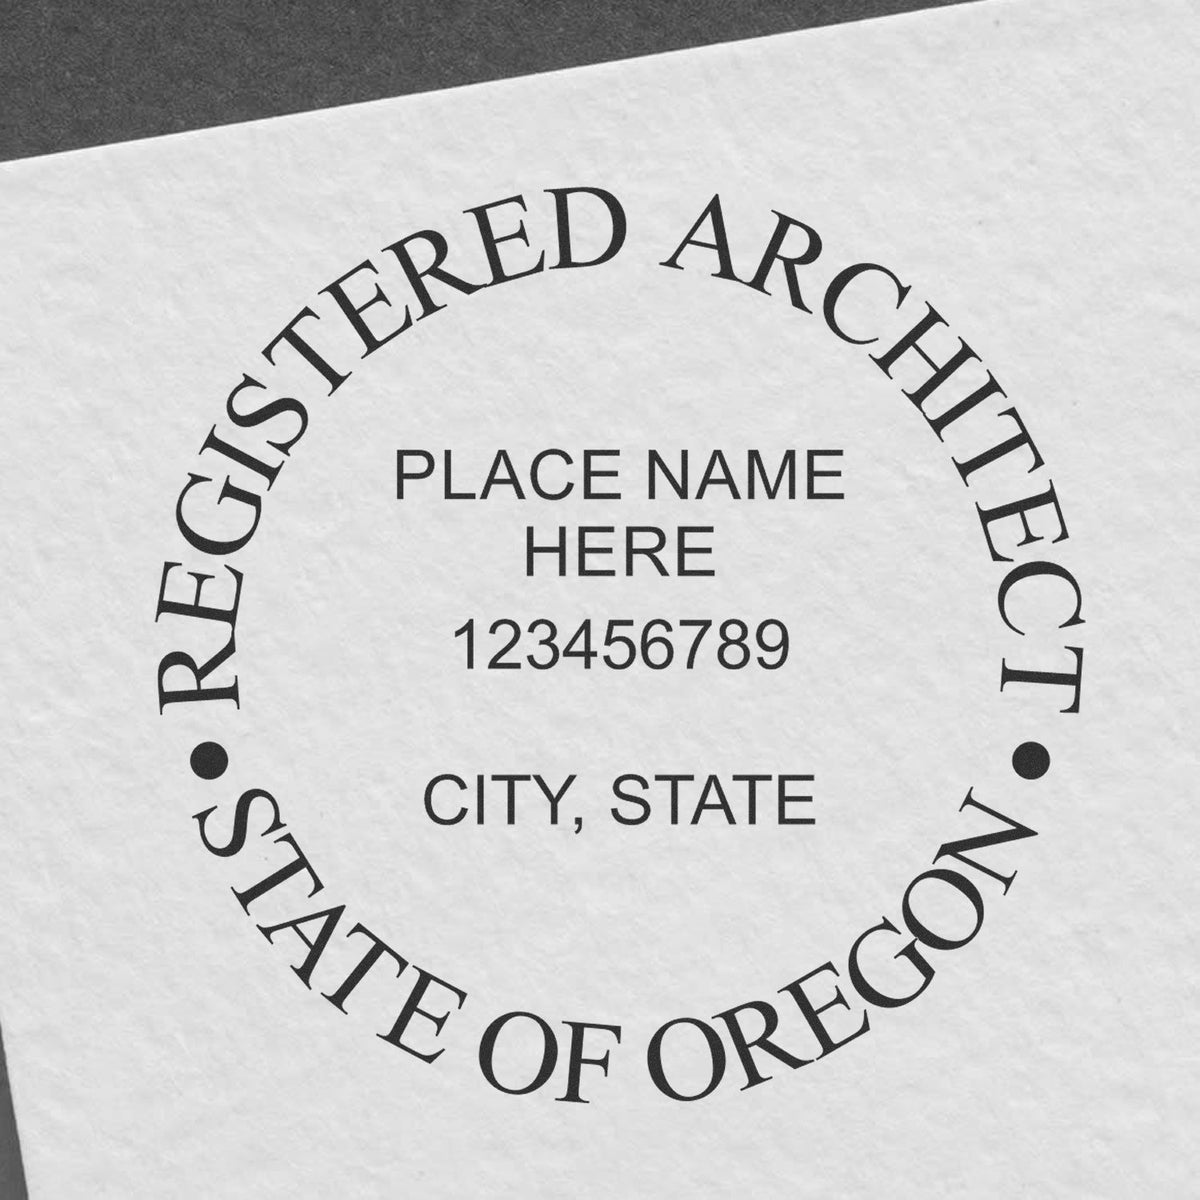 Oregon Architect Seal Stamp Lifestyle Photo